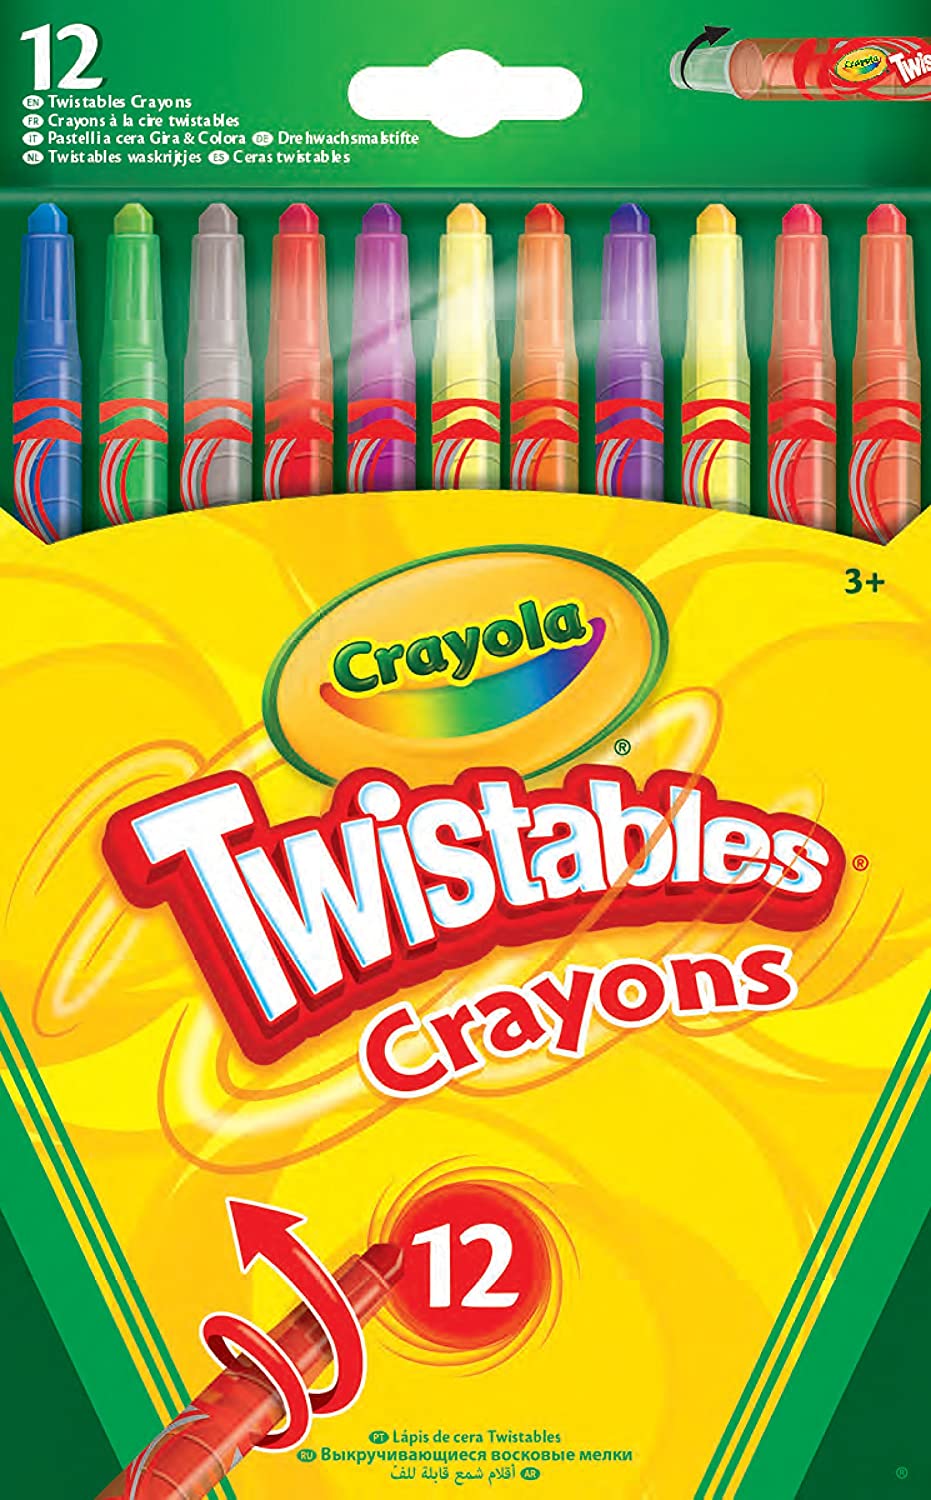 Crayola Twistables Never Need Sharpening!